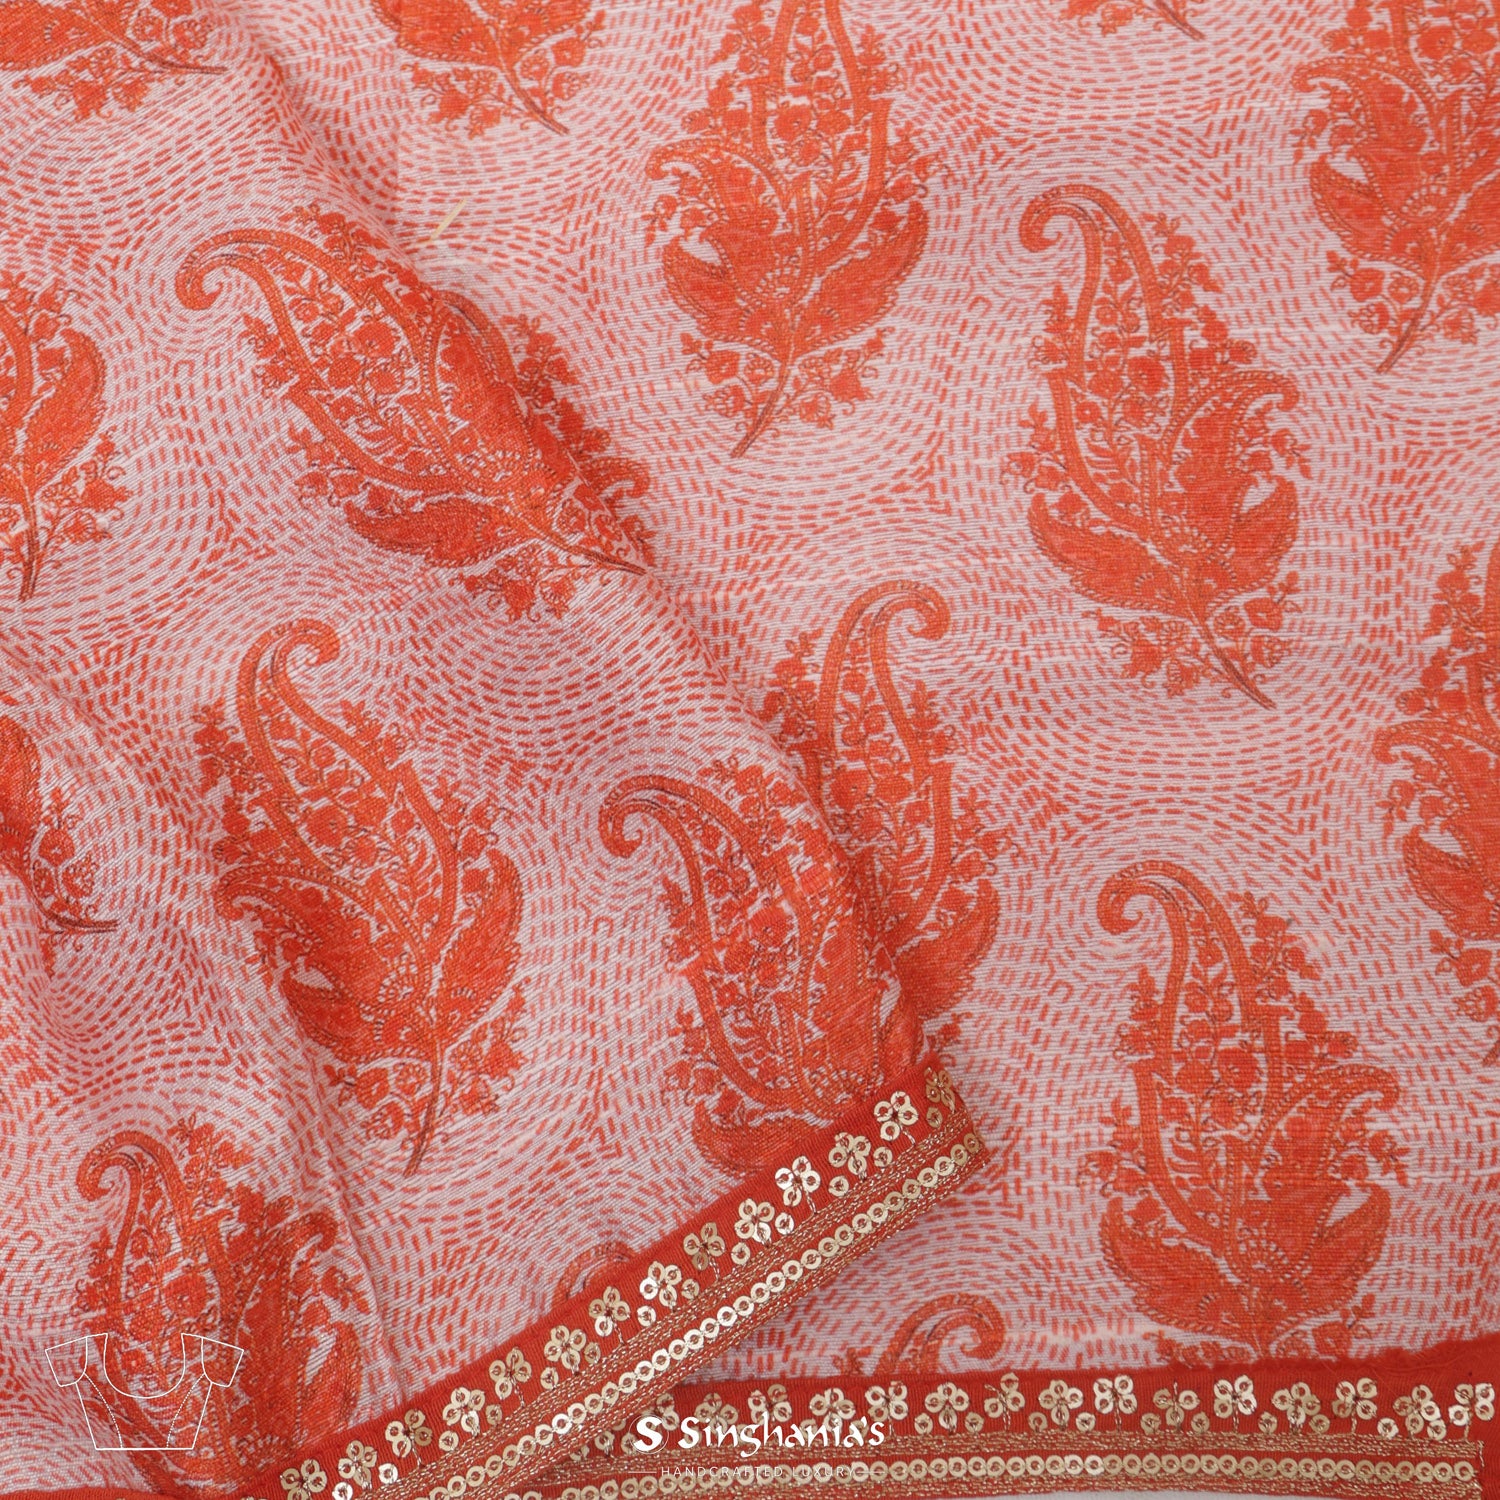 Coral Orange Printed Organza Saree With Floral Buttis